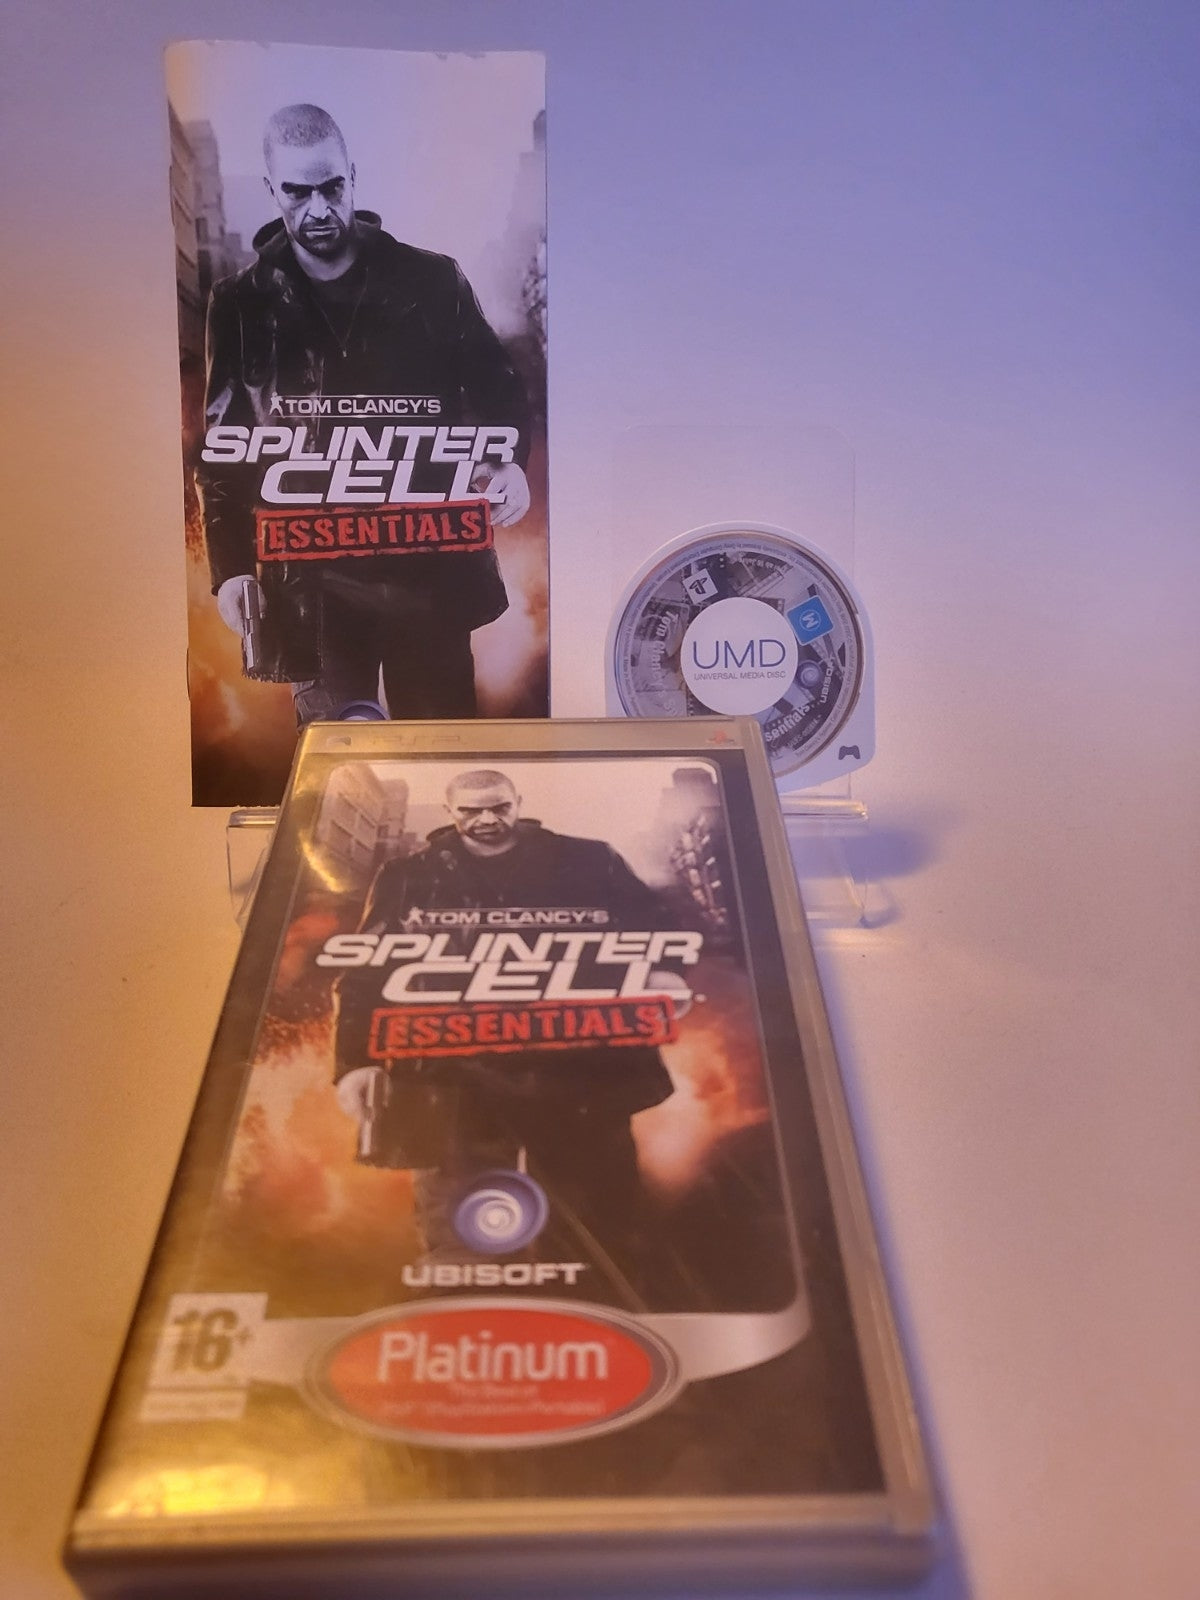 Tom Clancy's Splinter Cell Essentials Platinum Playstation Portable